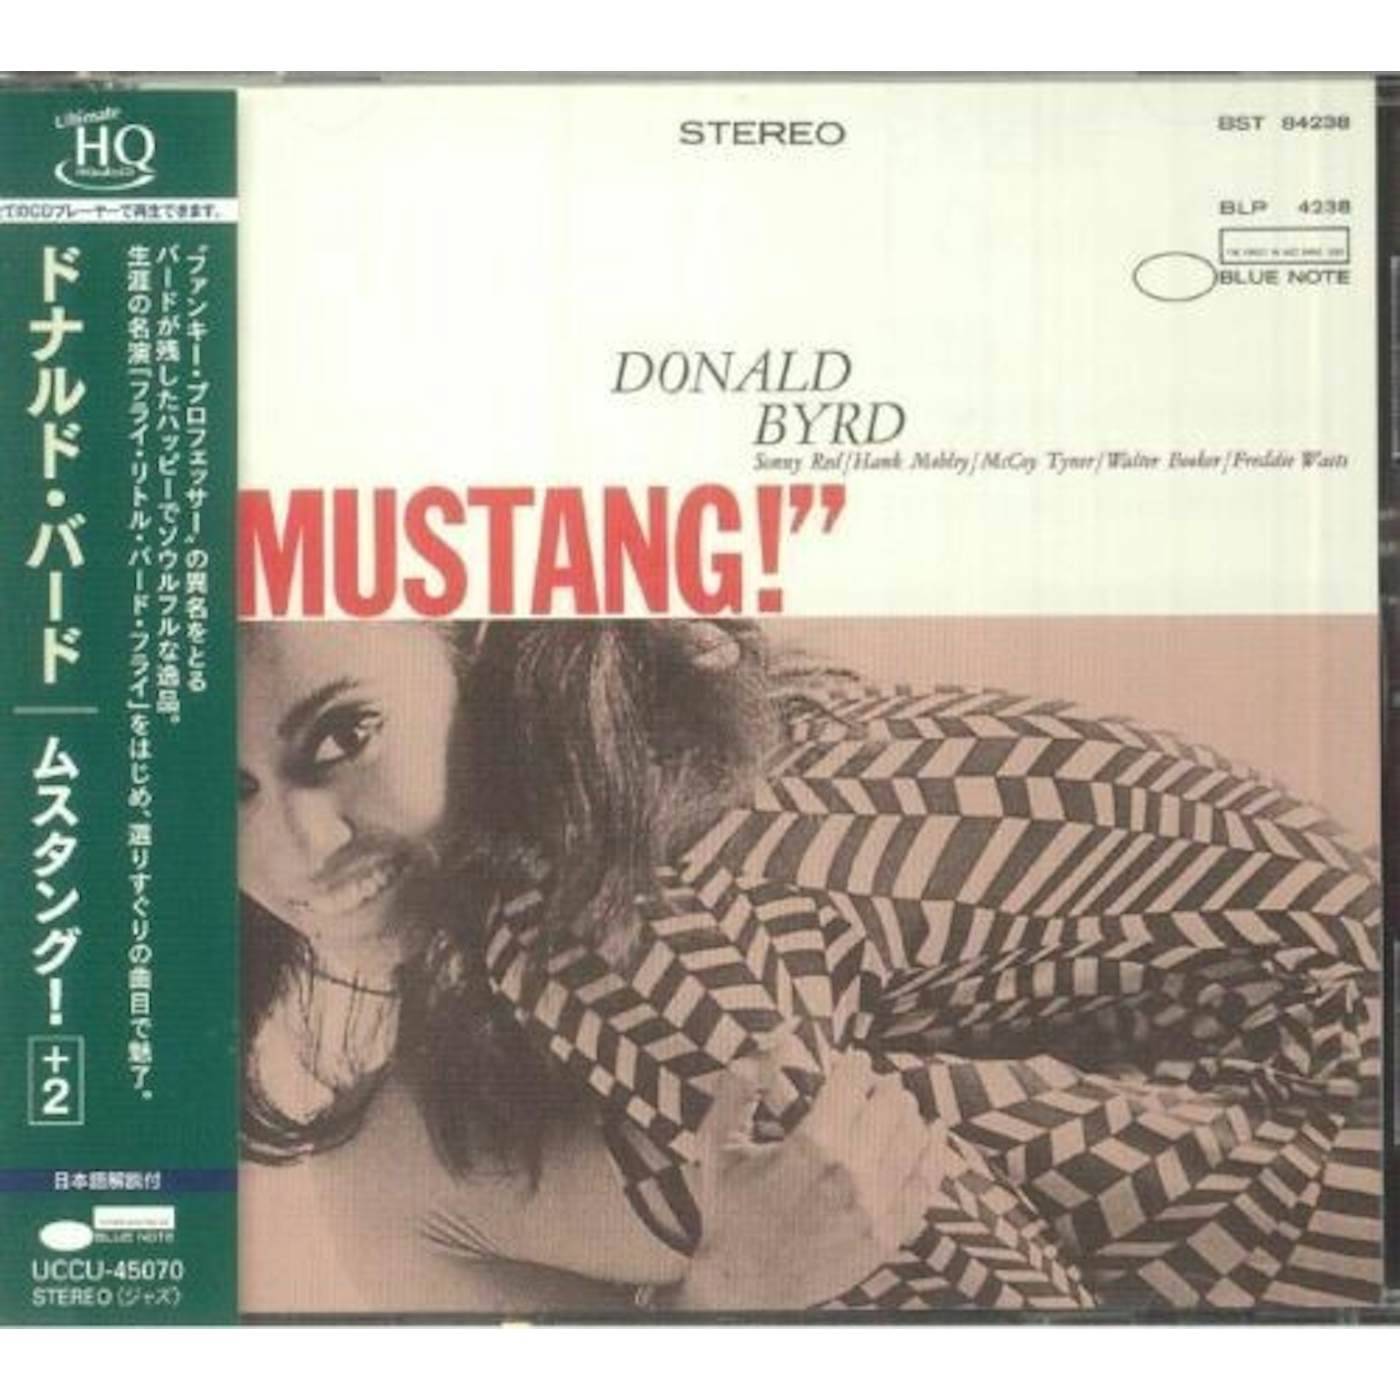 Donald Byrd MUSTANG CD